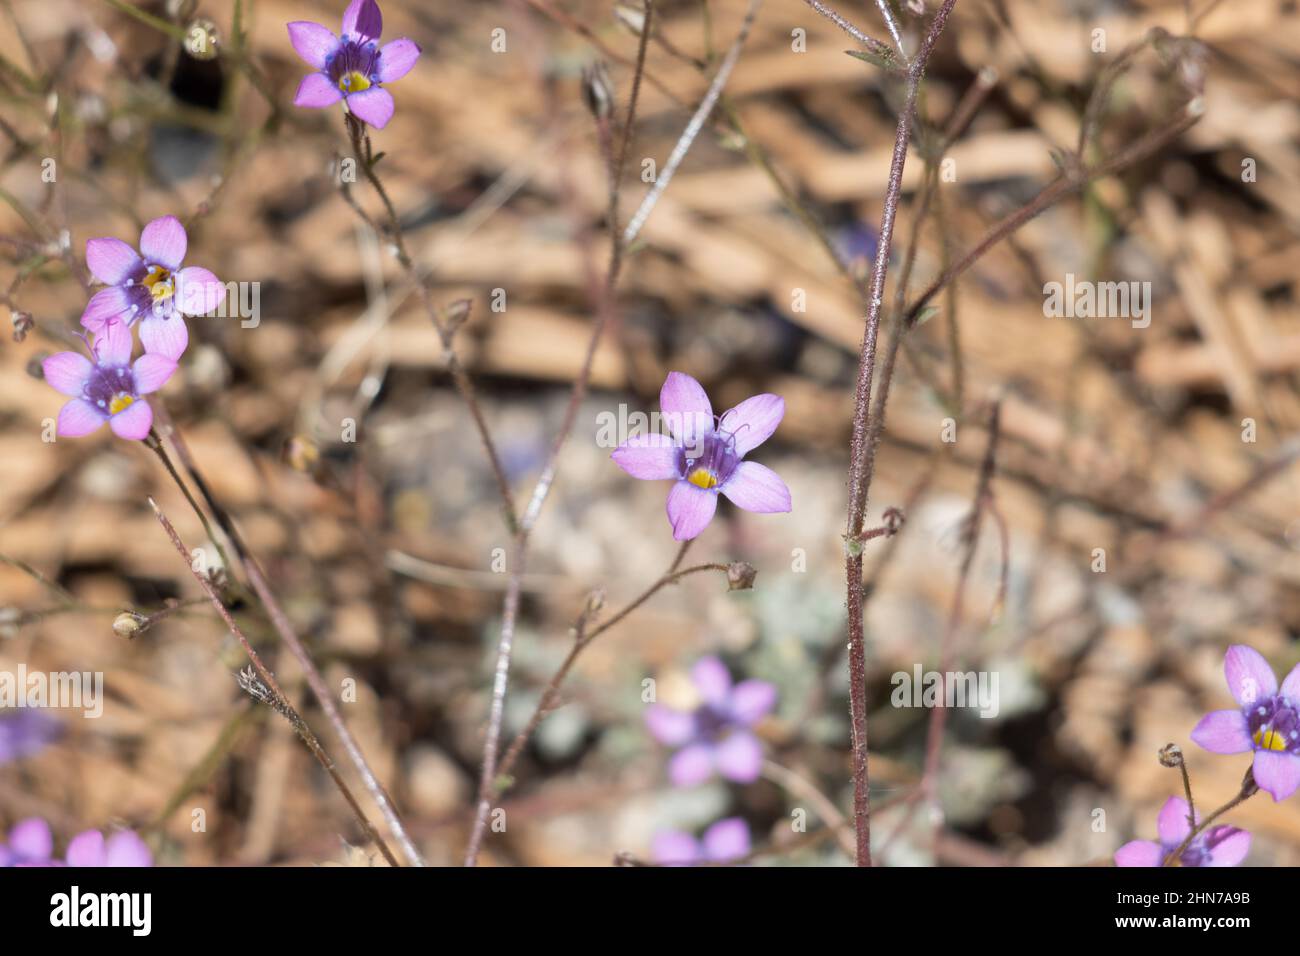 Purple flowering terminal cyme inflorescences of Saltugilia Splendens, Polemoniaceae, native annual herb in the San Gabriel Mountains, Summer. Stock Photo